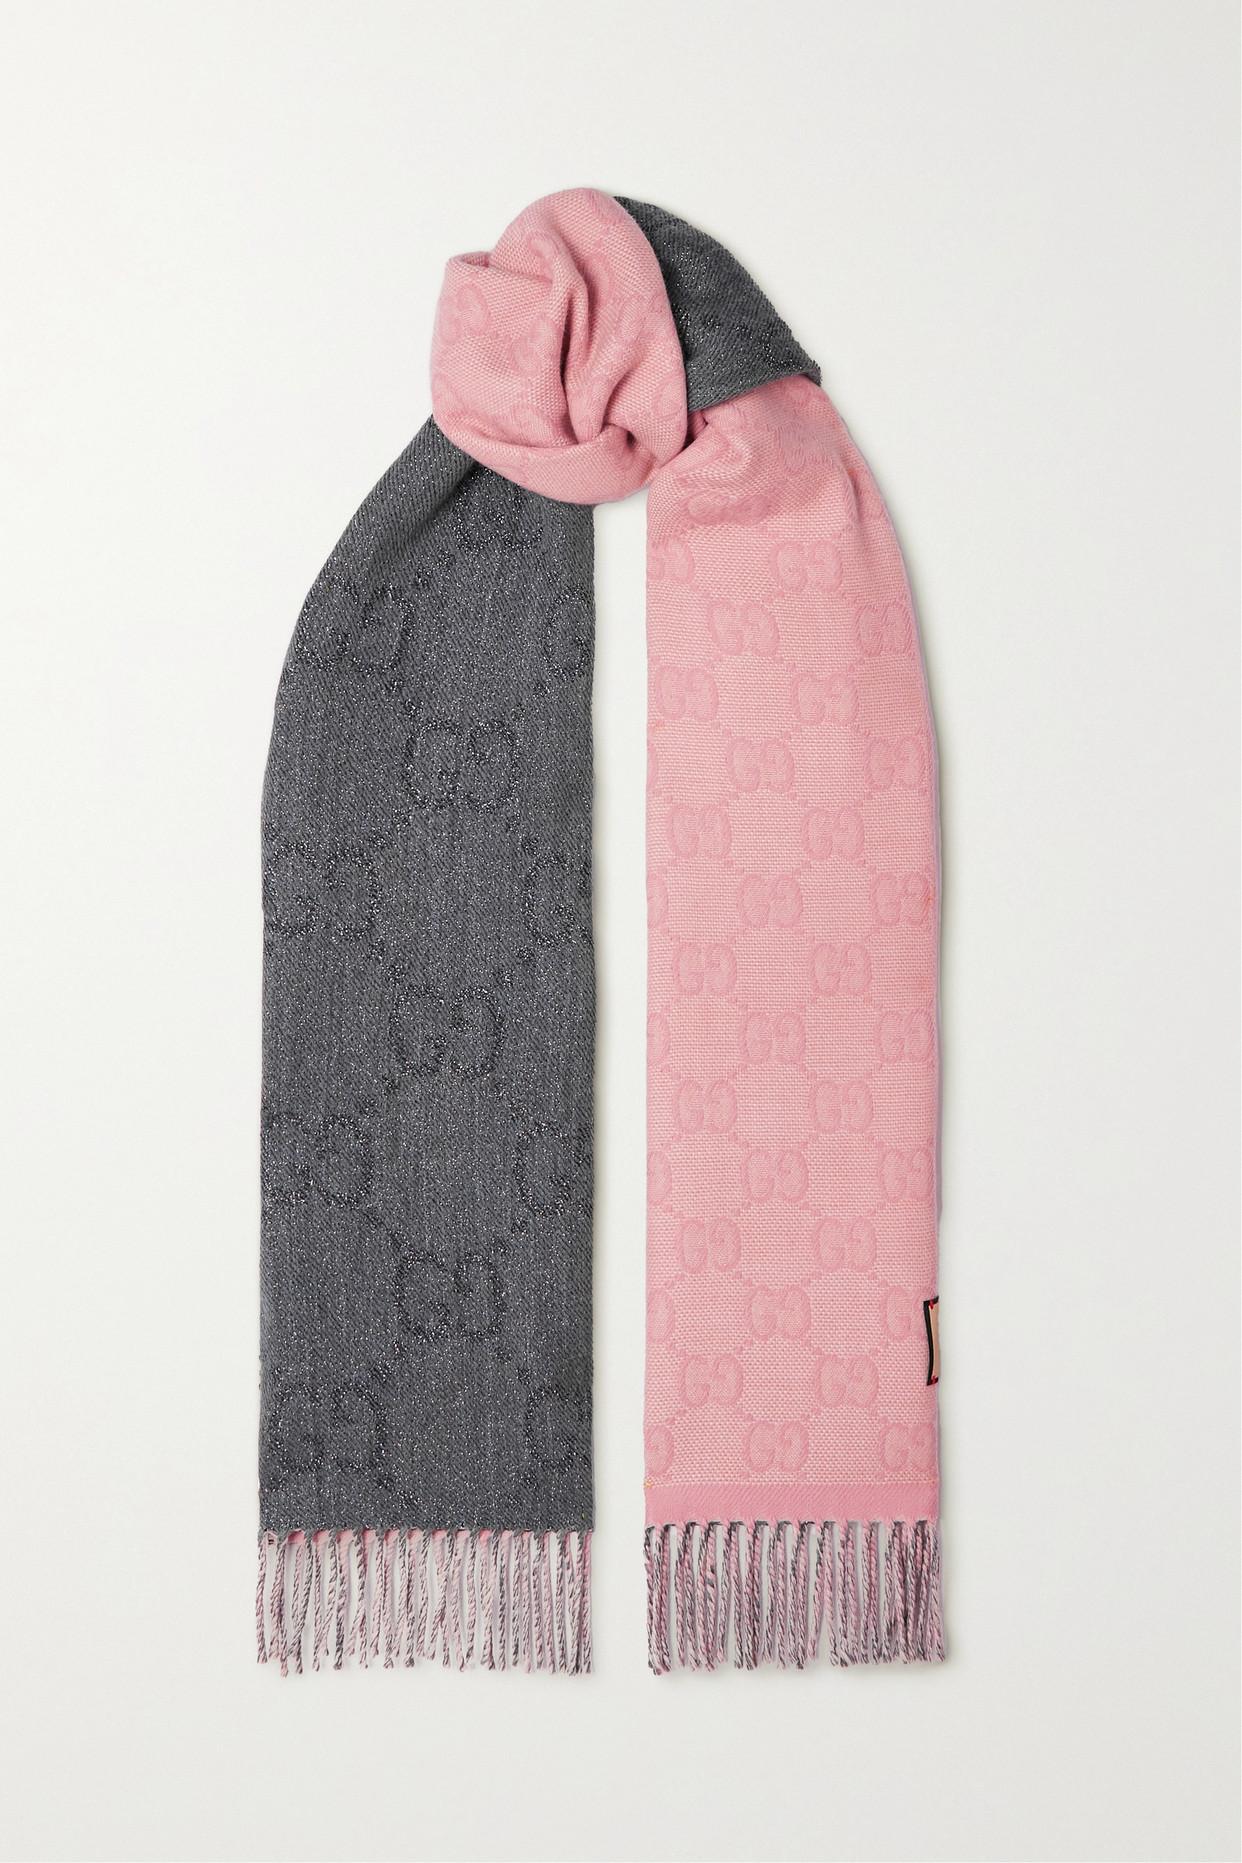 Guggenheim Museum Discipline snorkel Gucci Fringed Metallic Wool-blend Scarf in Pink | Lyst